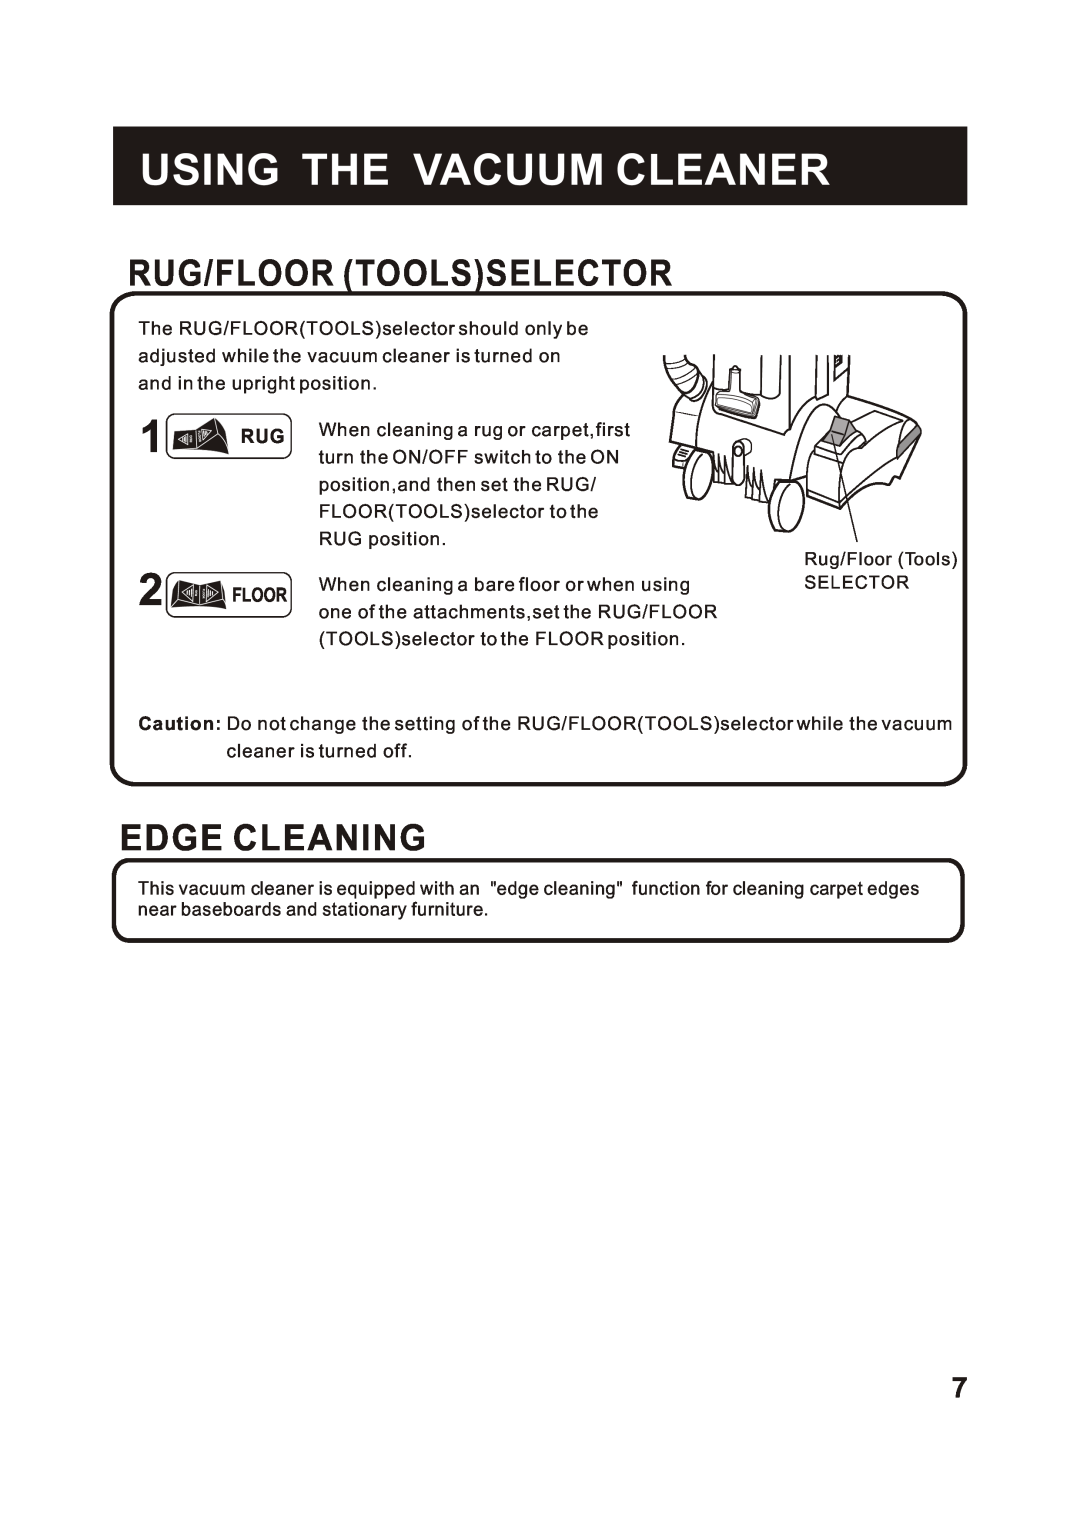 Fantom Vacuum FM741C instruction manual Rug/Floor Toolsselector, Edge Cleaning, Using The Vacuum Cleaner 